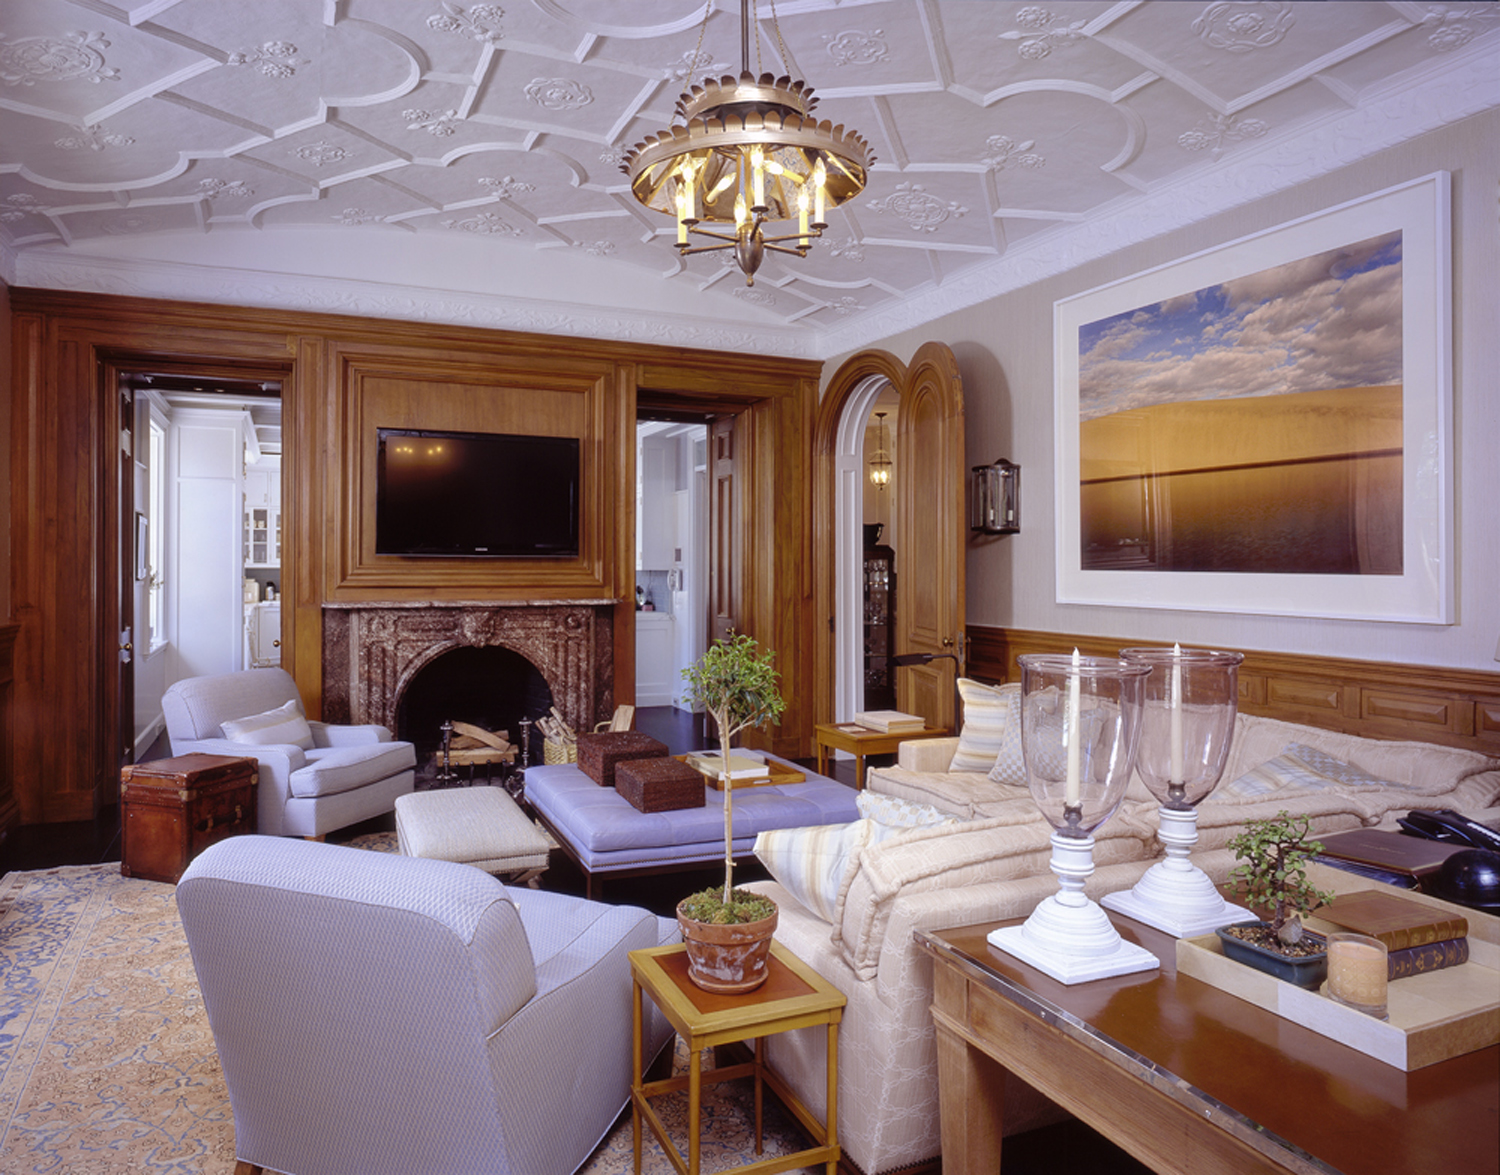 Historic-renovation-living-vaulted-plaster-ceiling-bronxville-ny-interior-w.jpg